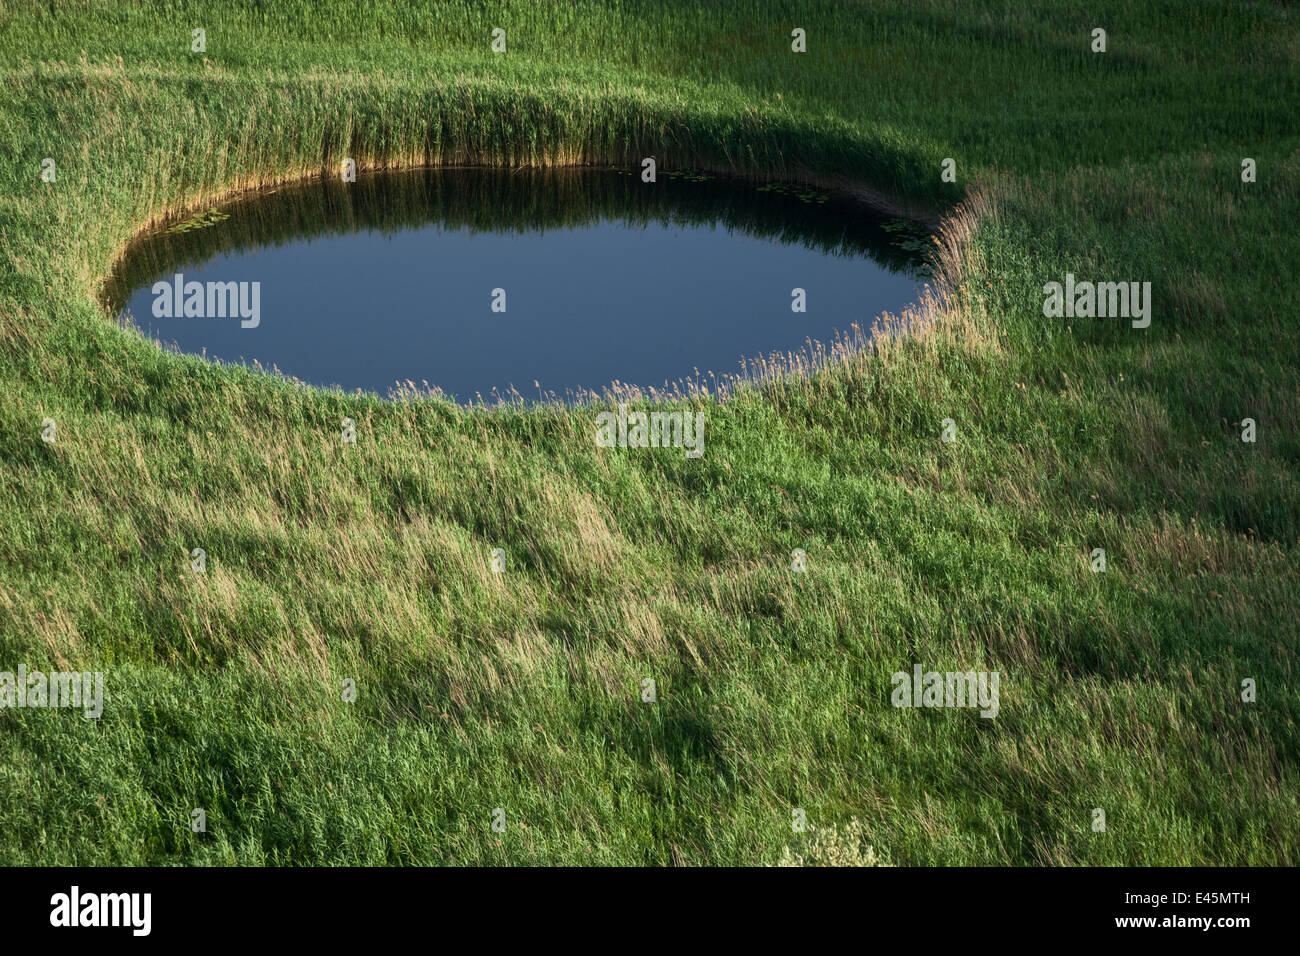 Sinkhole in marshland covered in Reeds (Phragmites sp) near the lower Neretva river delta, Dalmatia region, Croatia, May 2009 Stock Photo